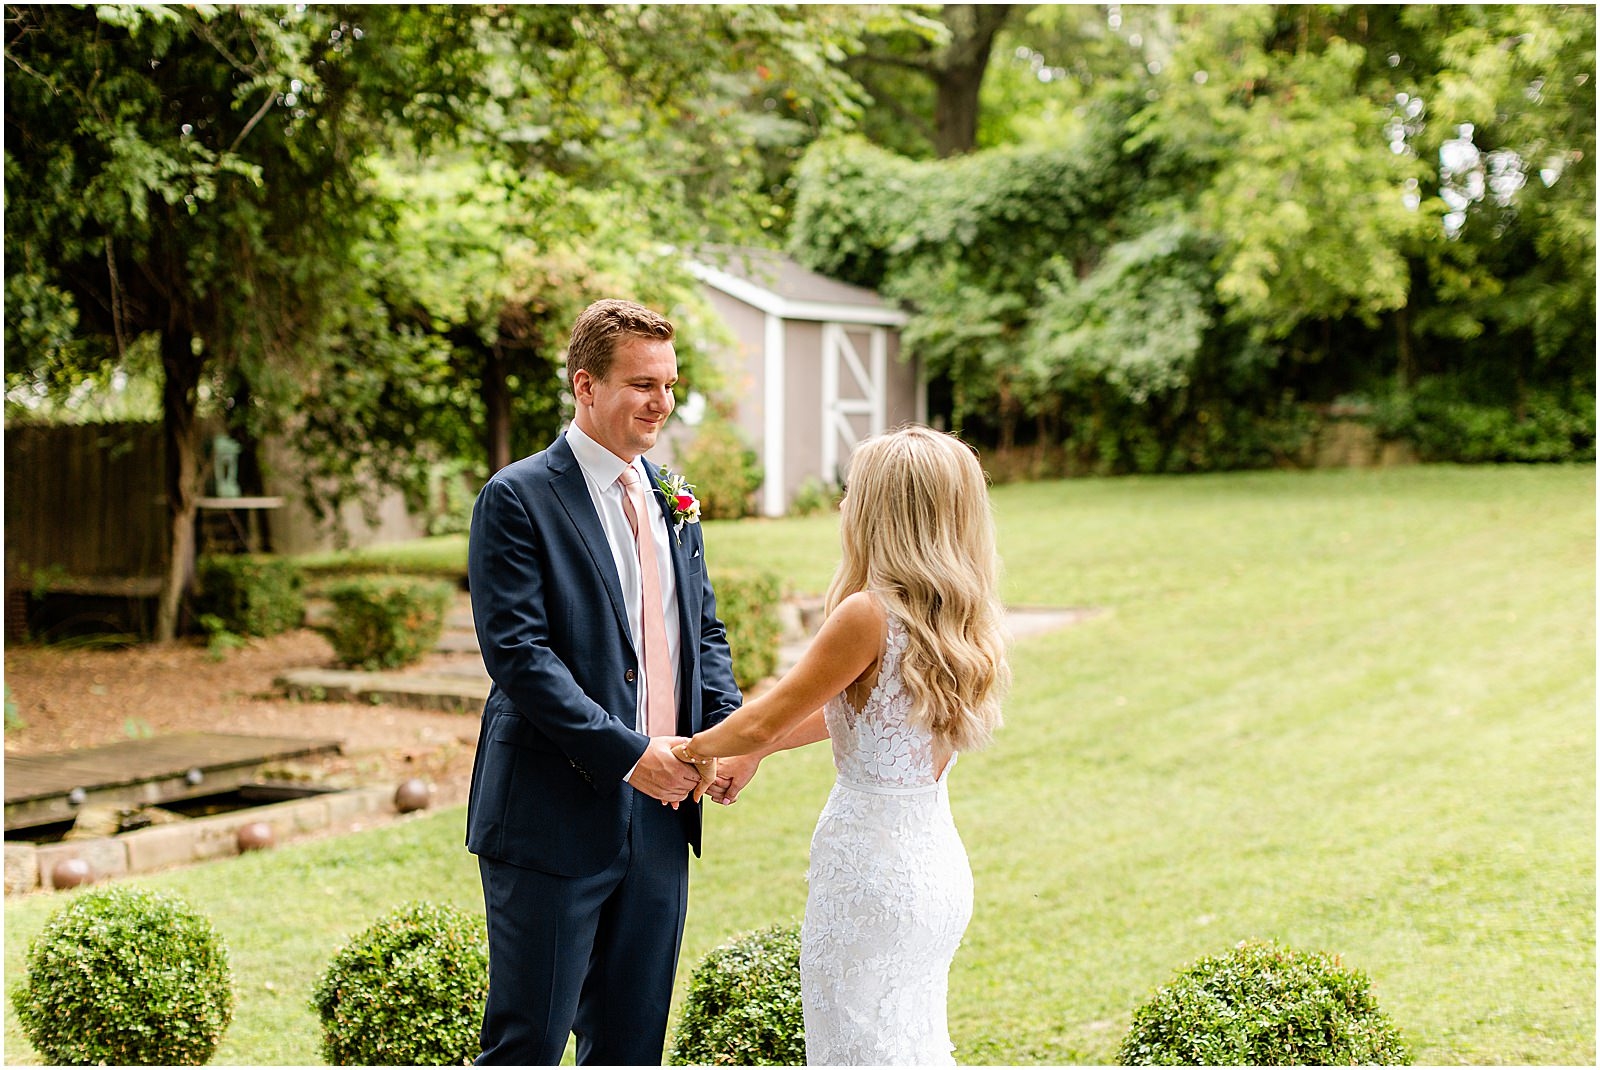 An Evansville Country Club Wedding | Madison and Christiaan | Bret and Brandie | Evansville Photographers | @bretandbrandie-0085.jpg